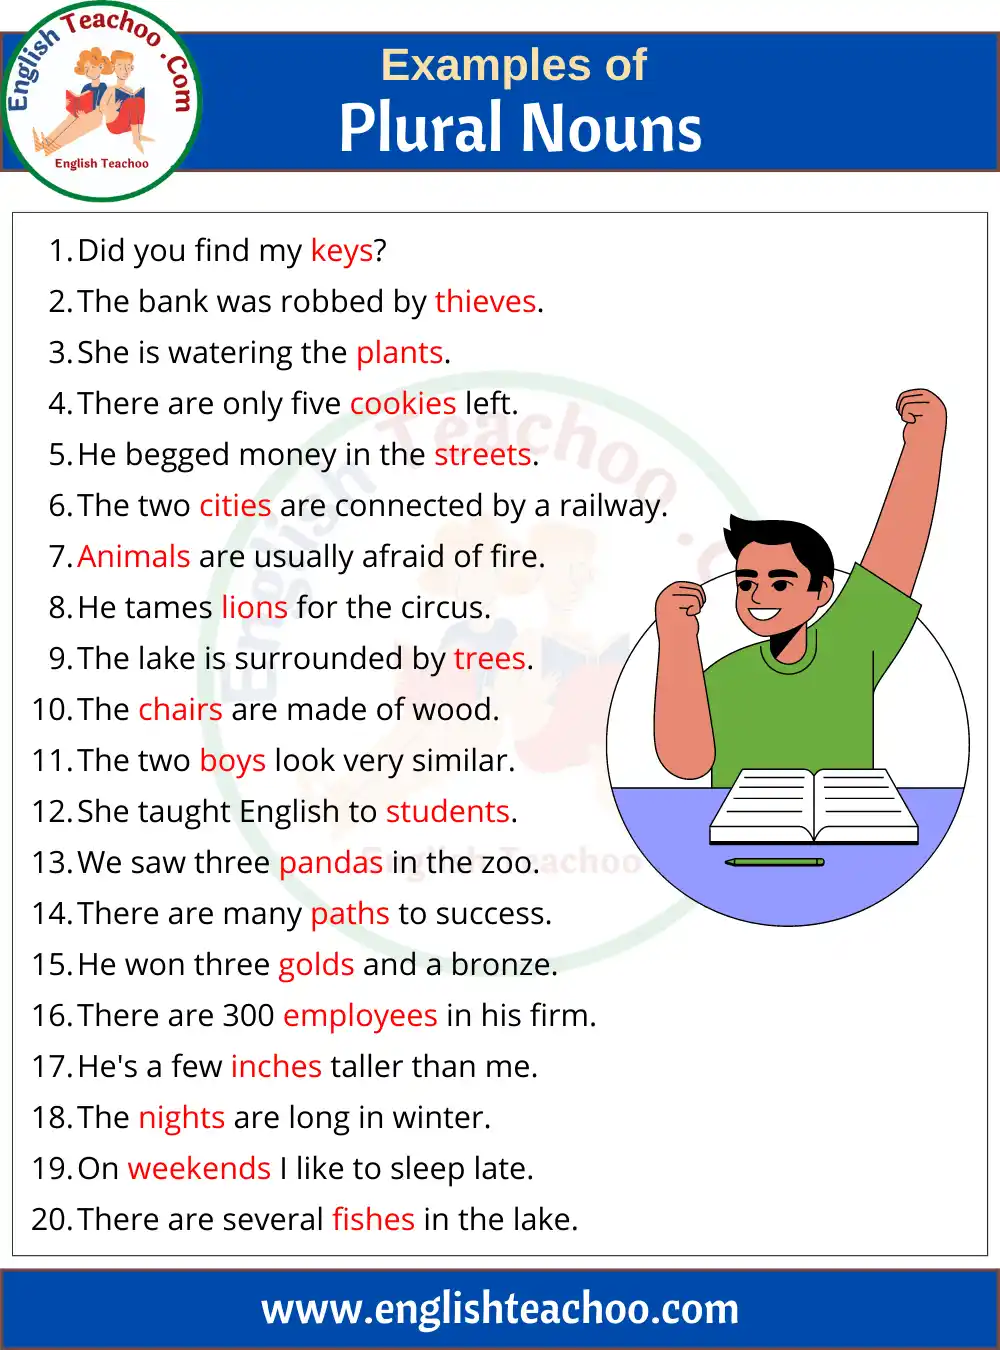 20 Examples Of Plural Nouns In Sentences EnglishTeachoo